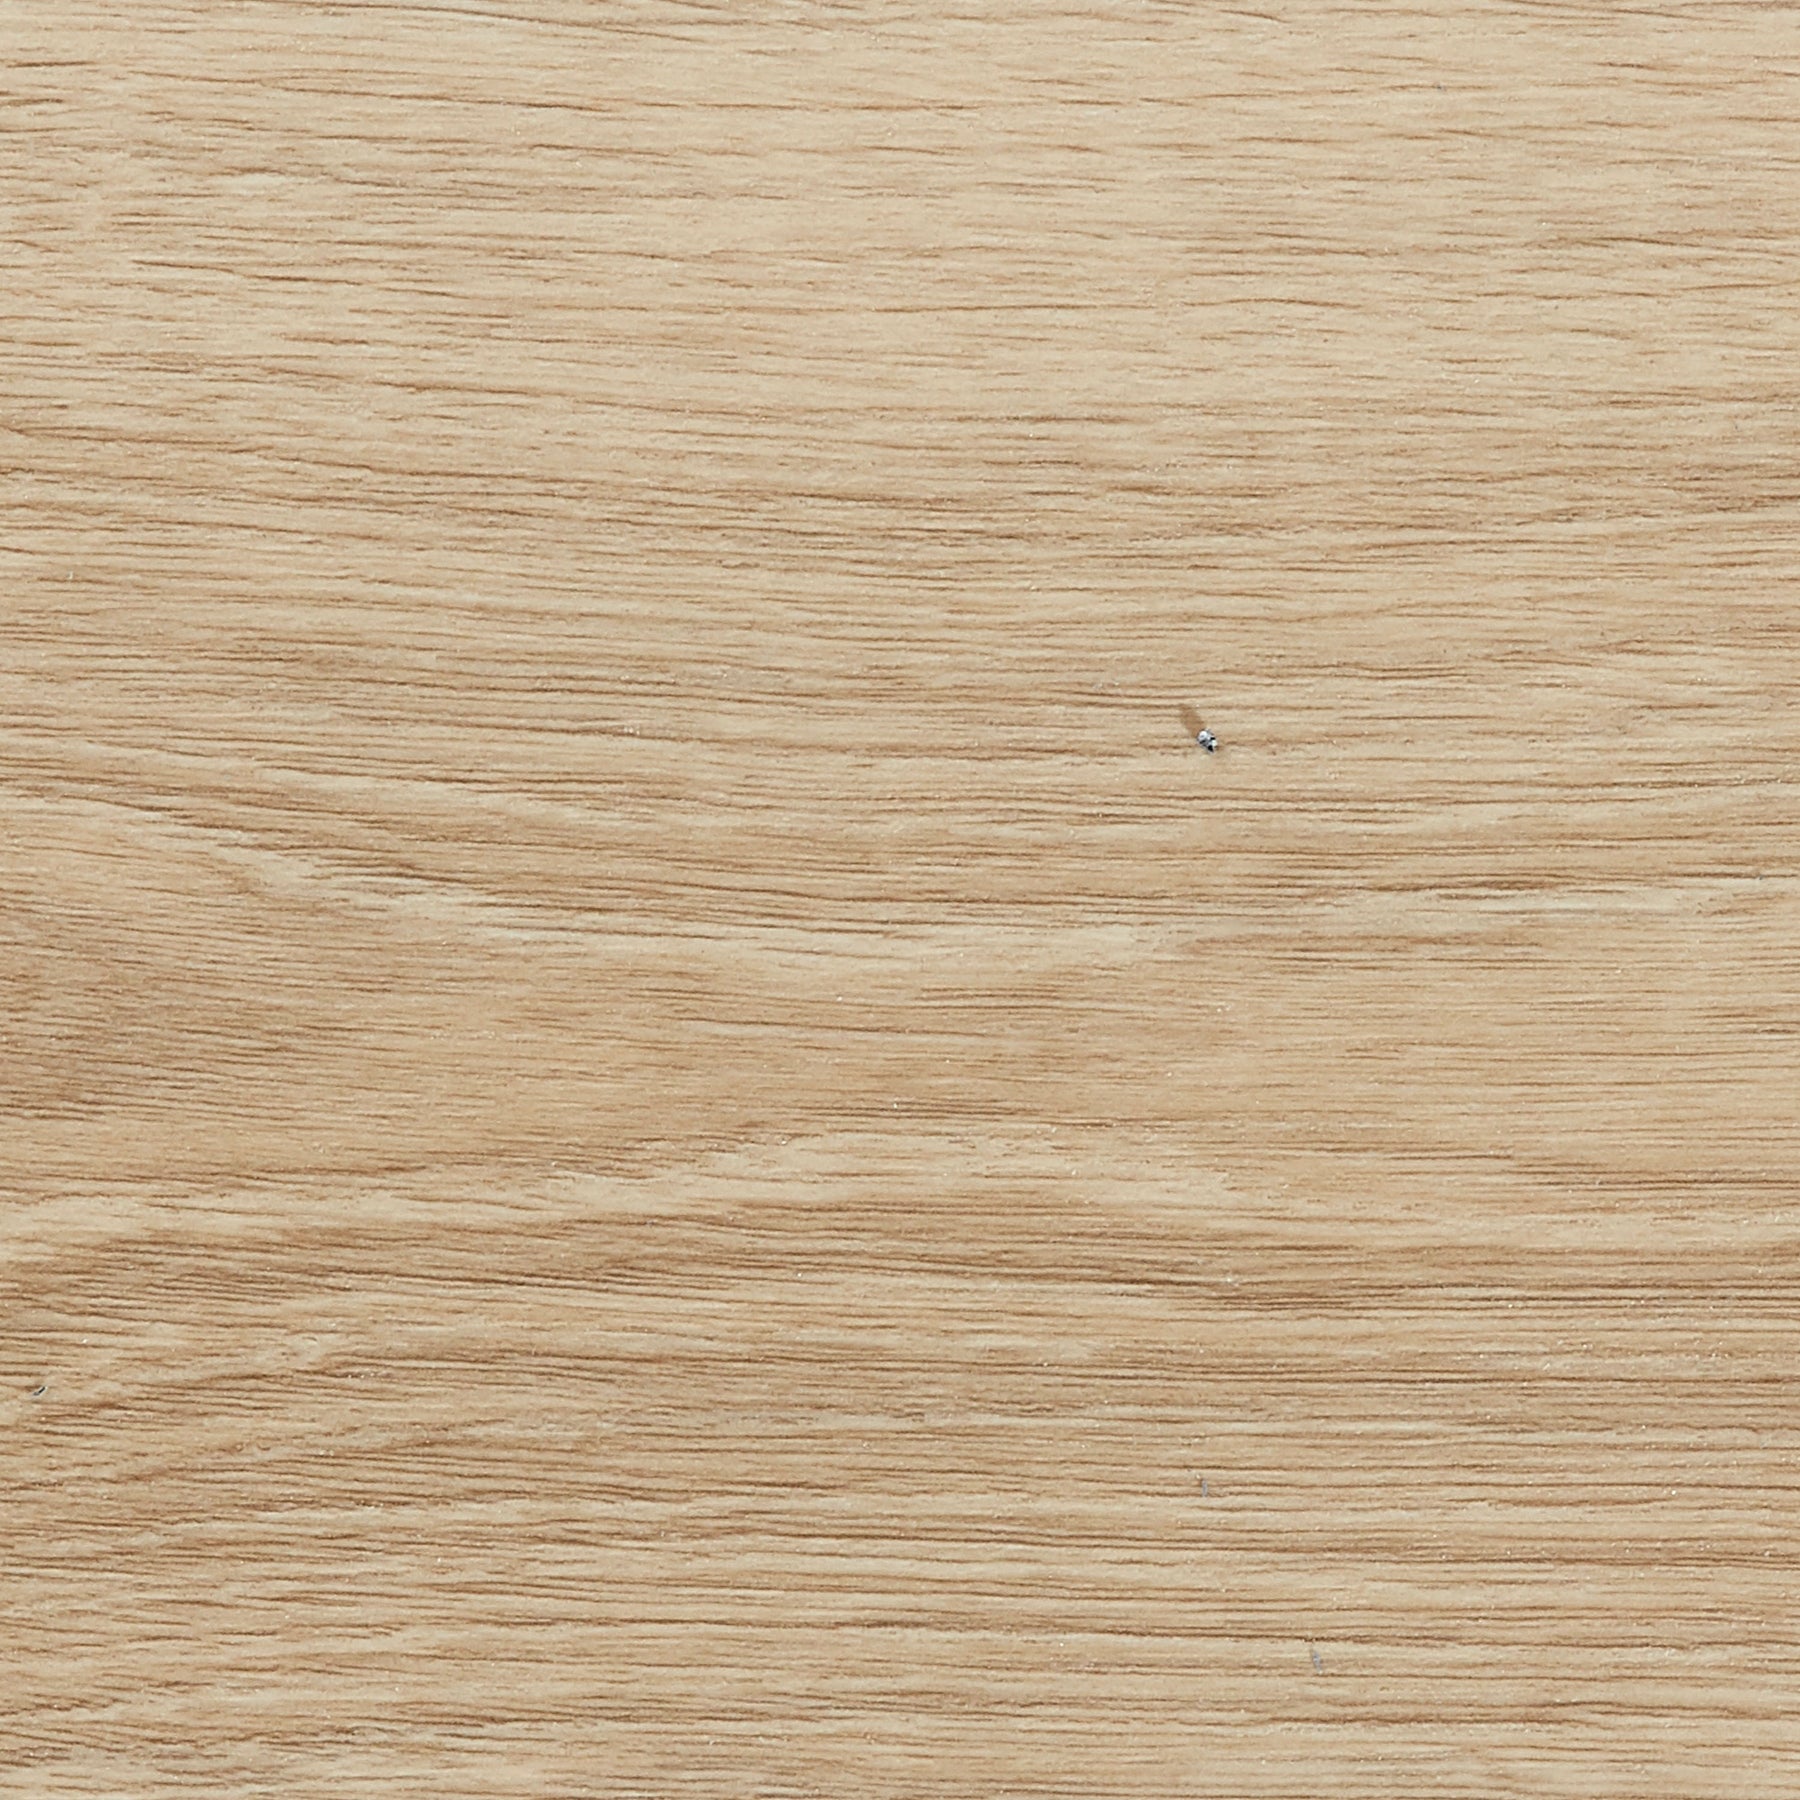 60001603 (Pure Click 55 Authentic Oak (Woodgrain) Natural)